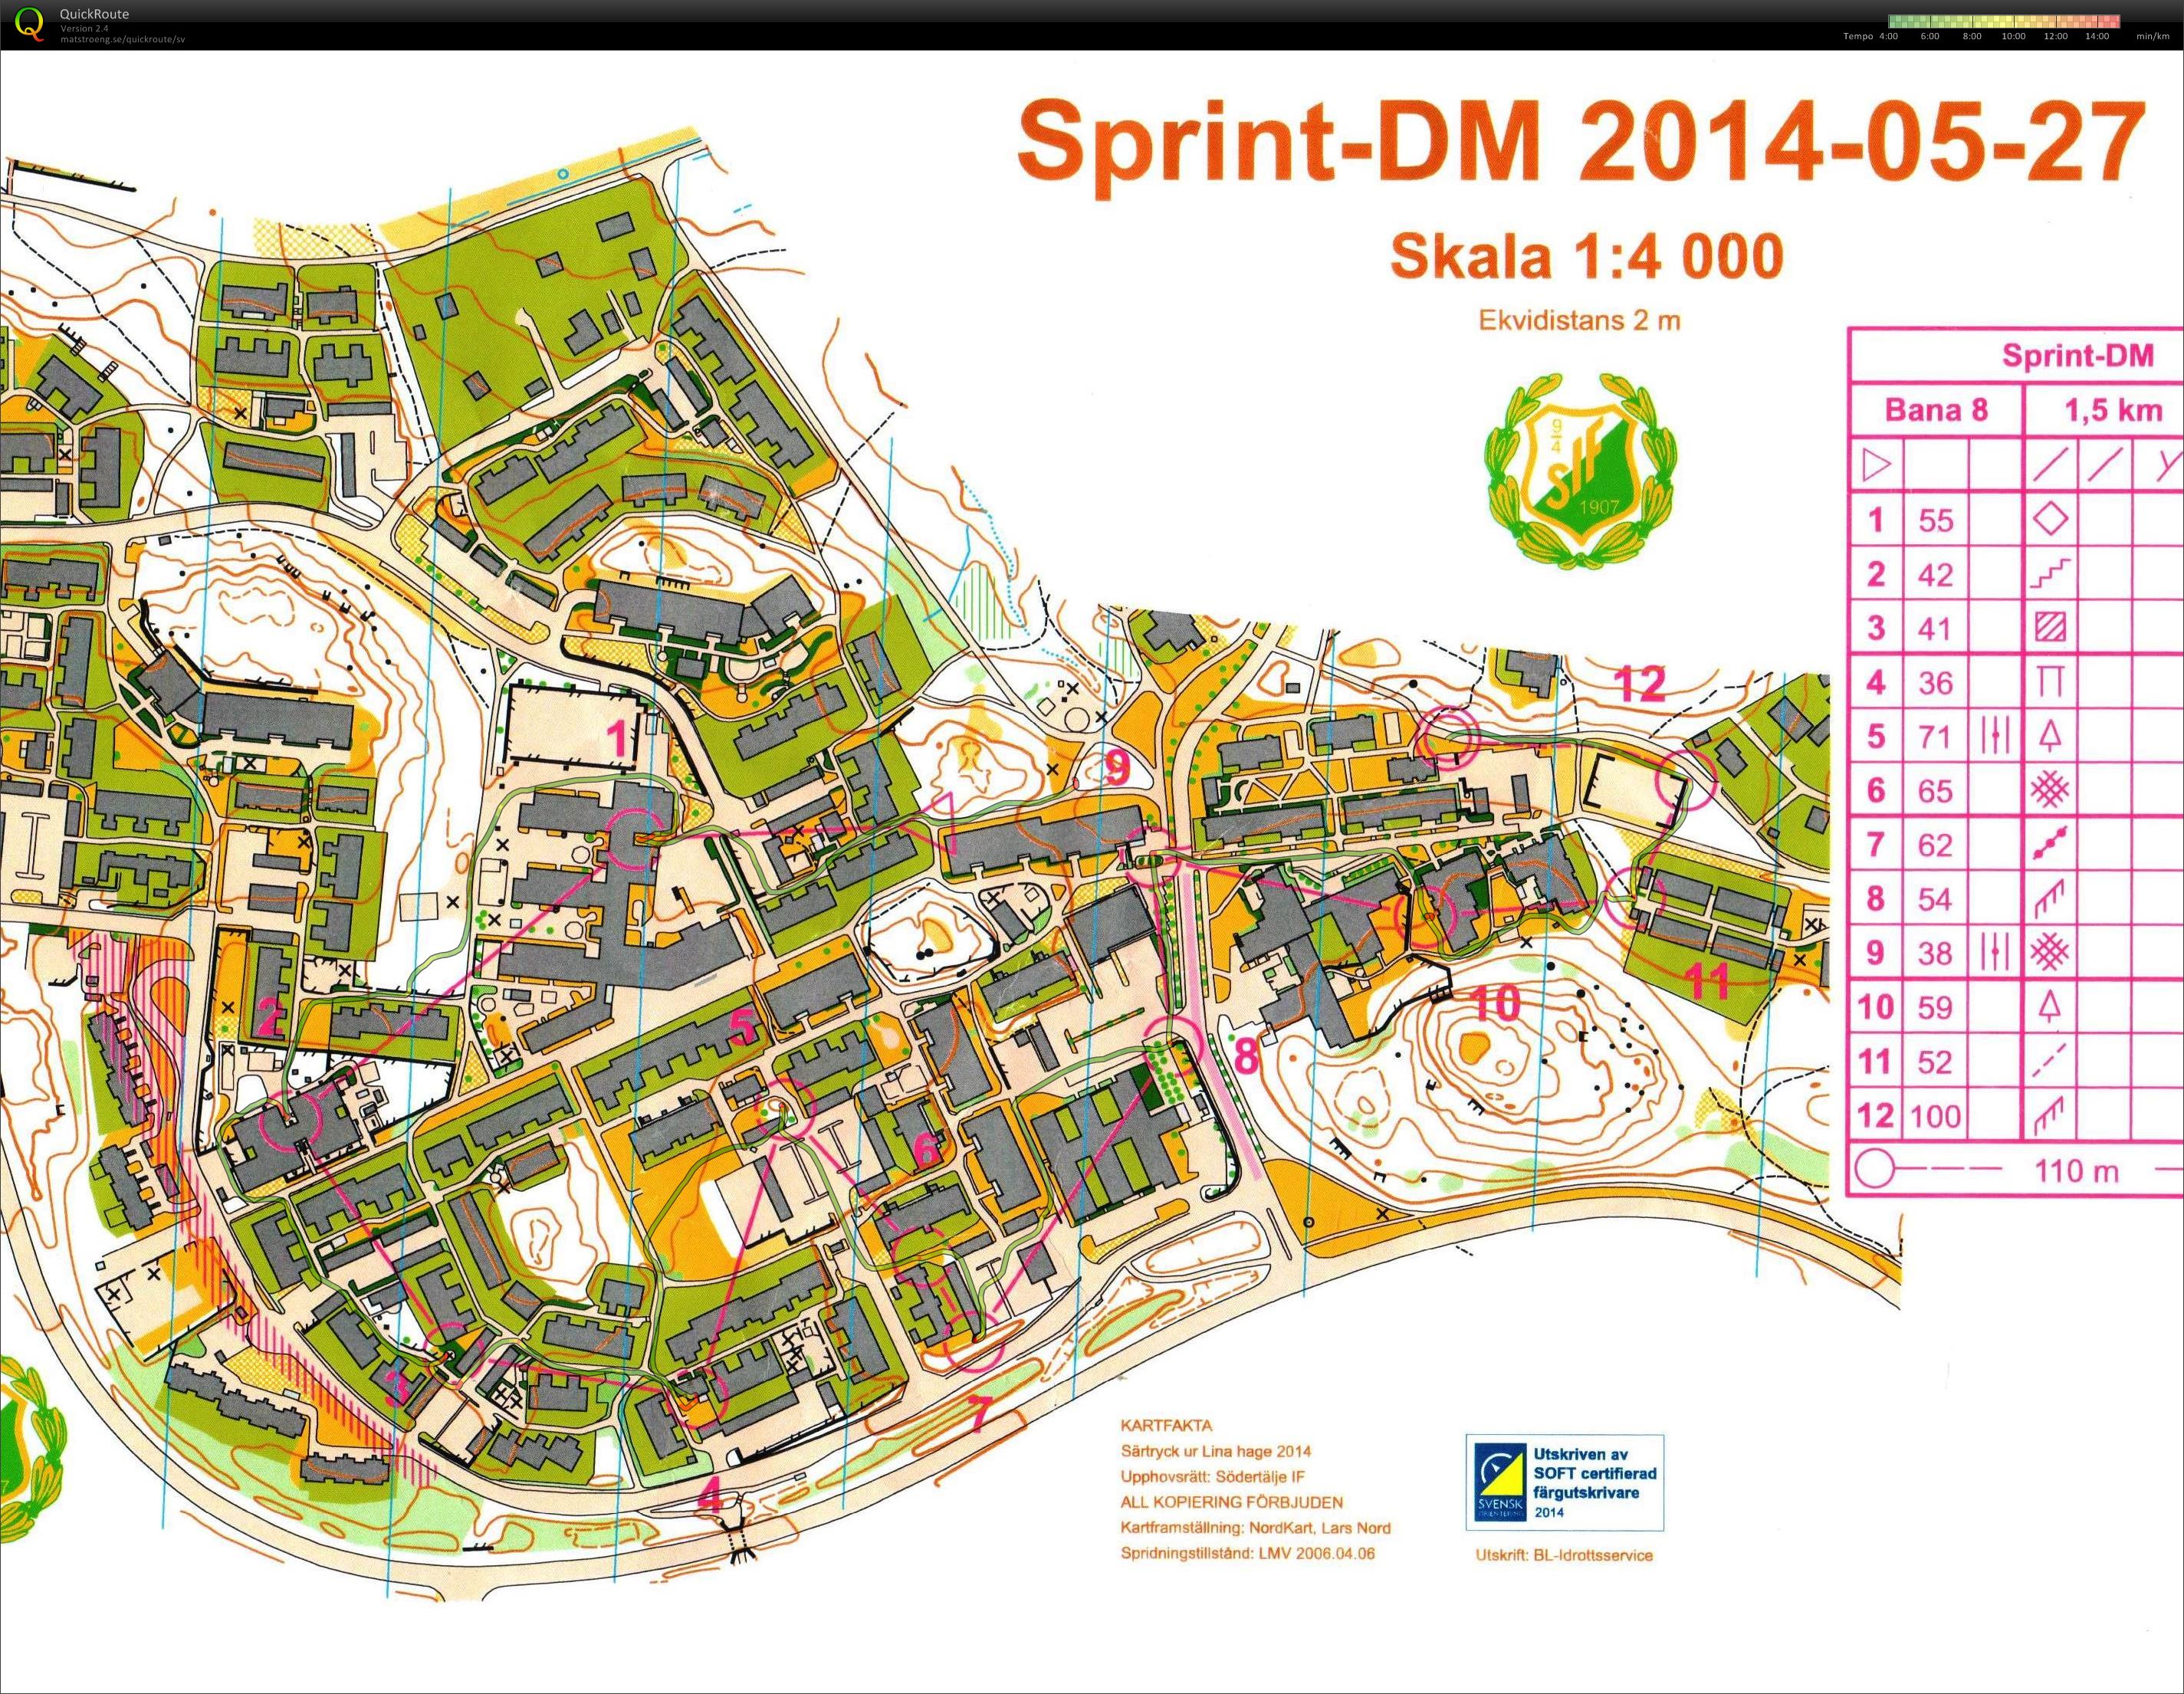 DM sprint Södermanland (27-05-2014)